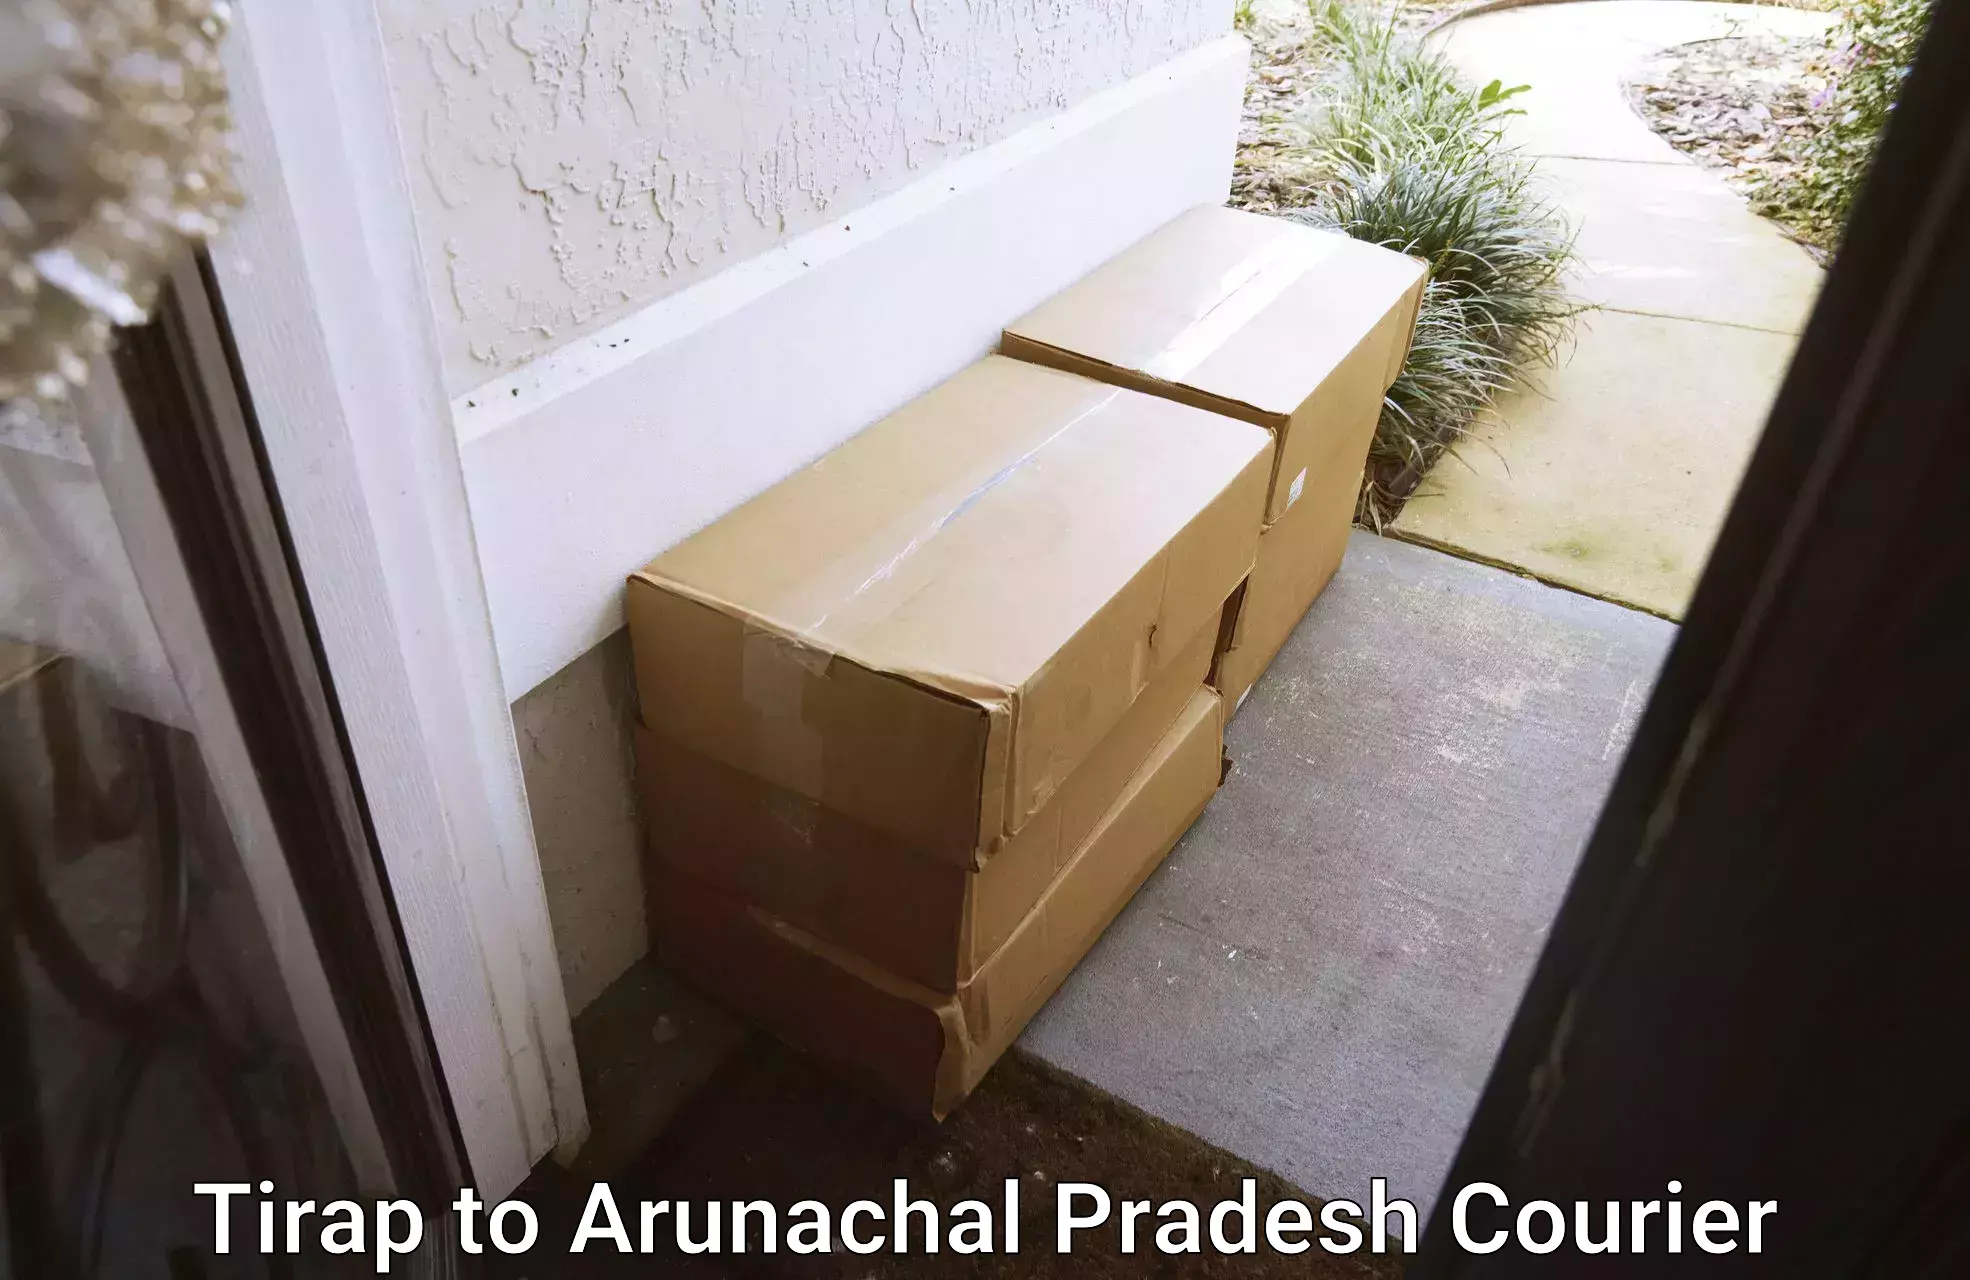 Delivery service partnership in Tirap to Arunachal Pradesh